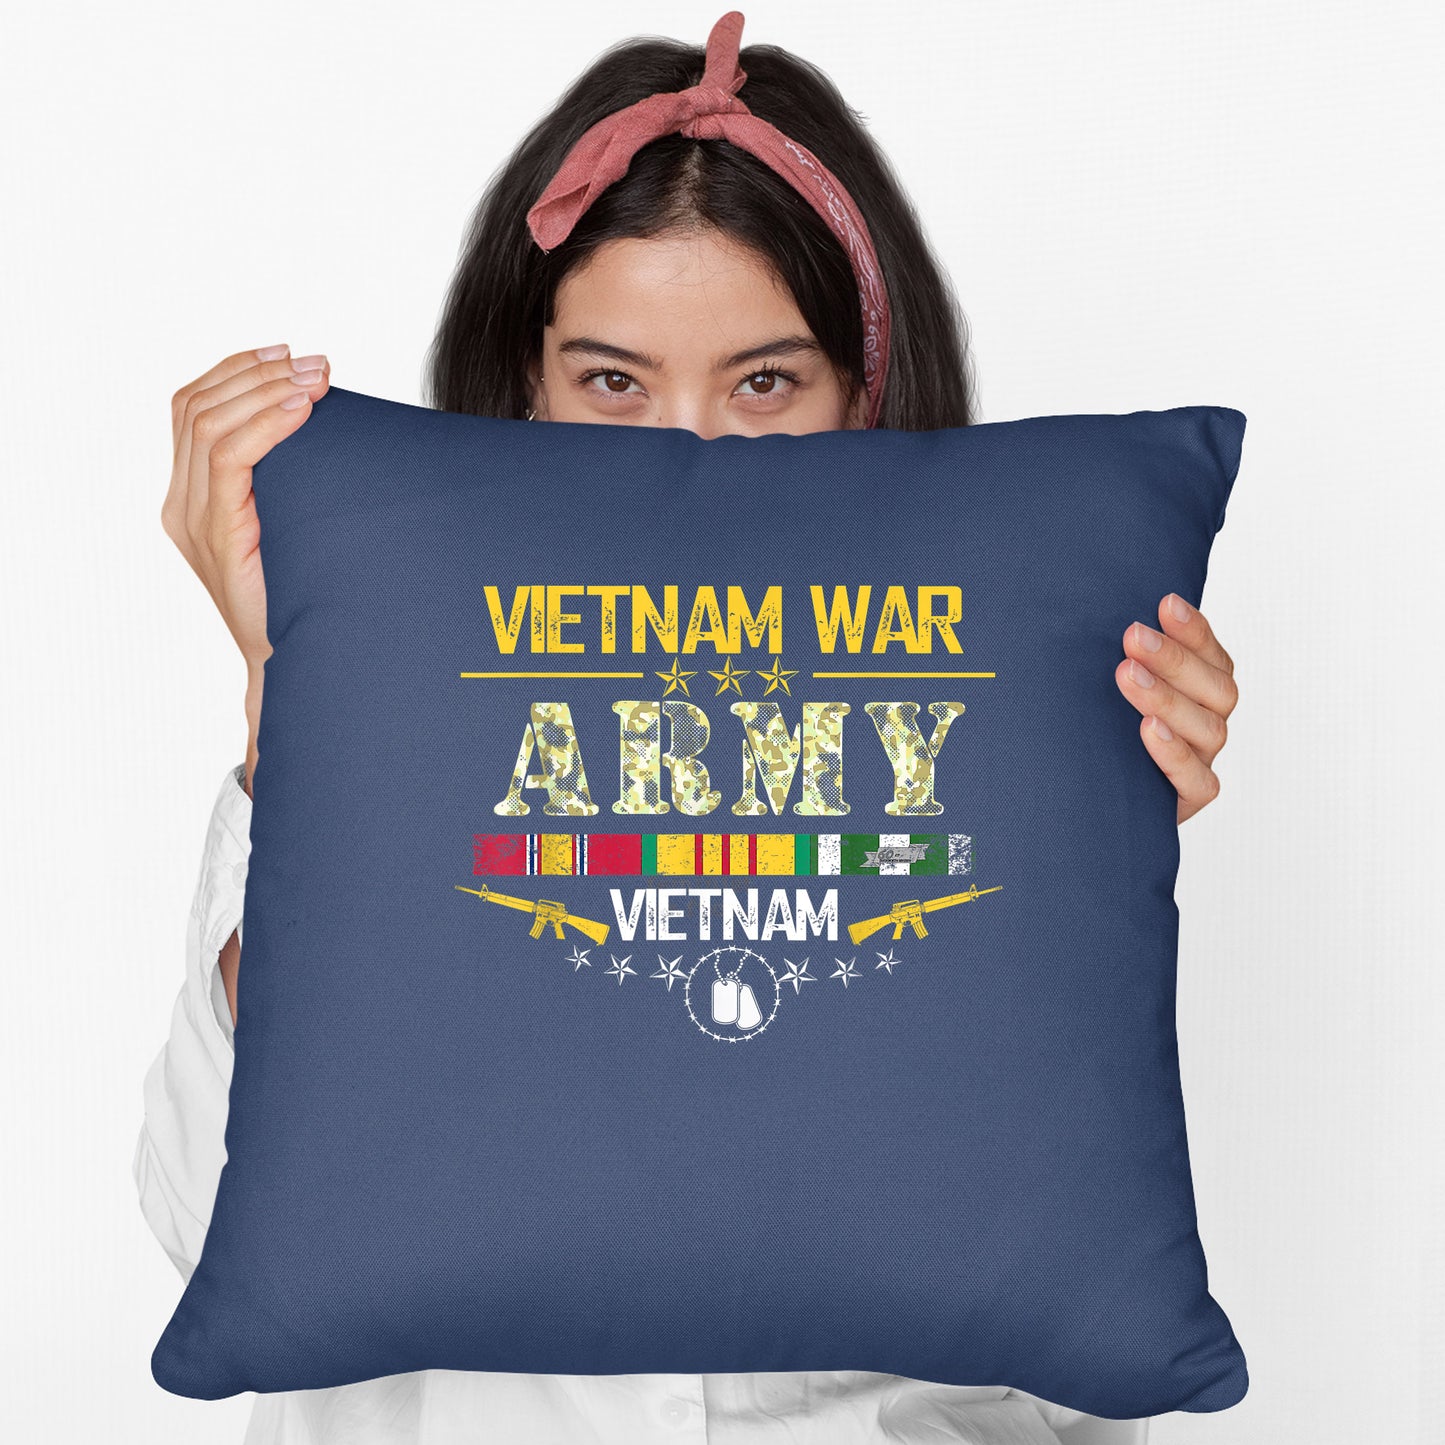 Vietnam Veteran War Army For Those Who Served Cushion, Print Linen Cushion